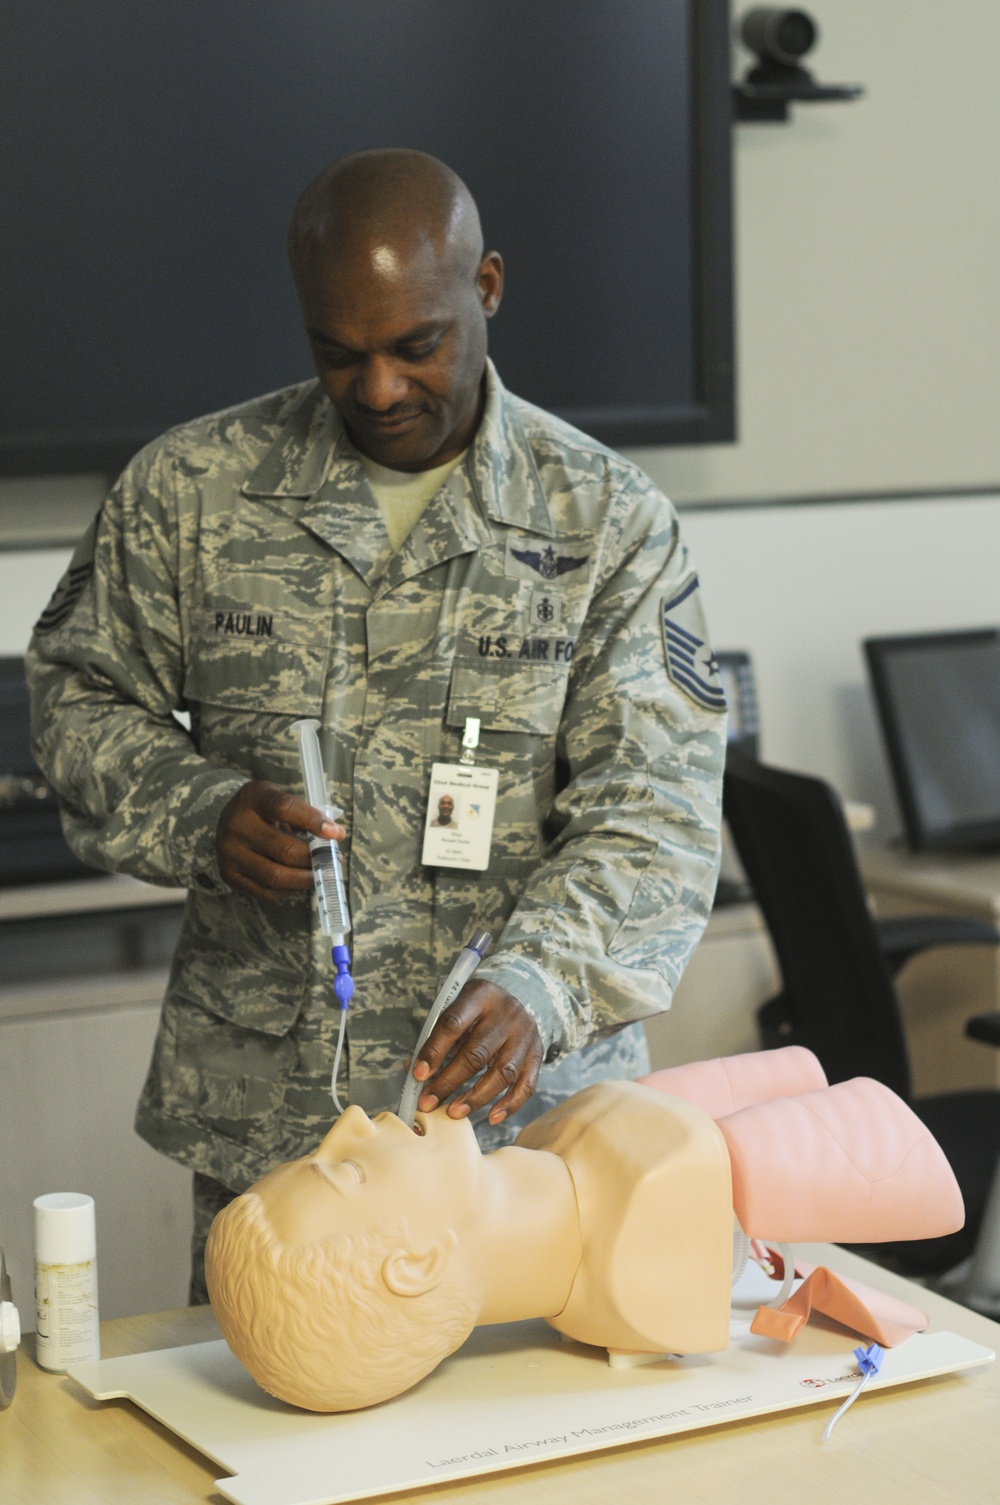 Aerospace medical technicians conduct ambulance services training